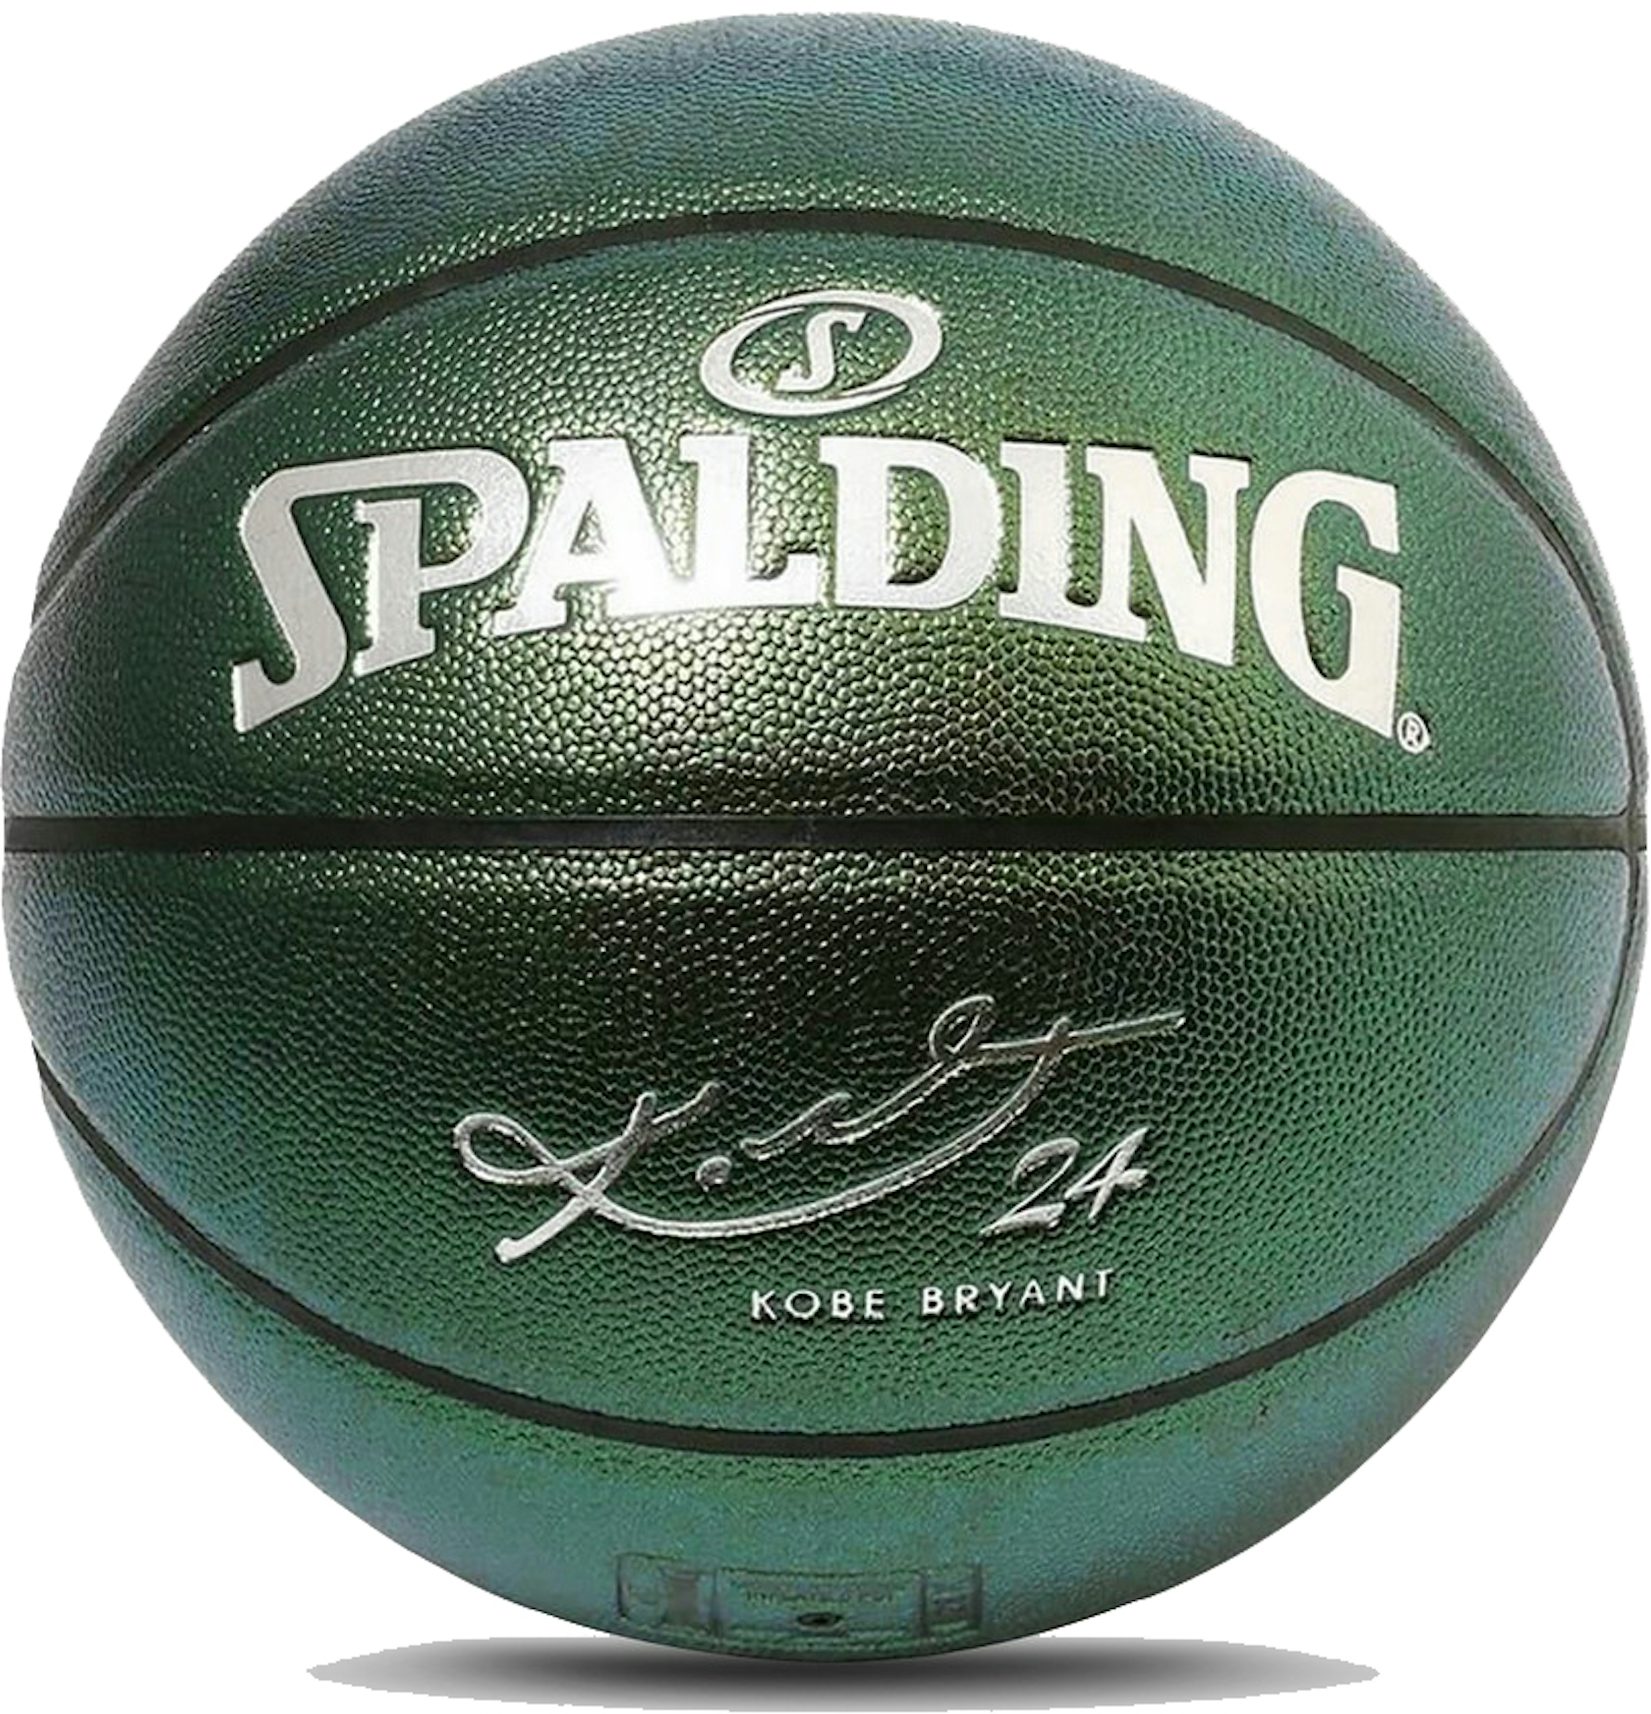 Spalding Kobe Bryant Size 7 Basketball Green Composite - FW20 - US